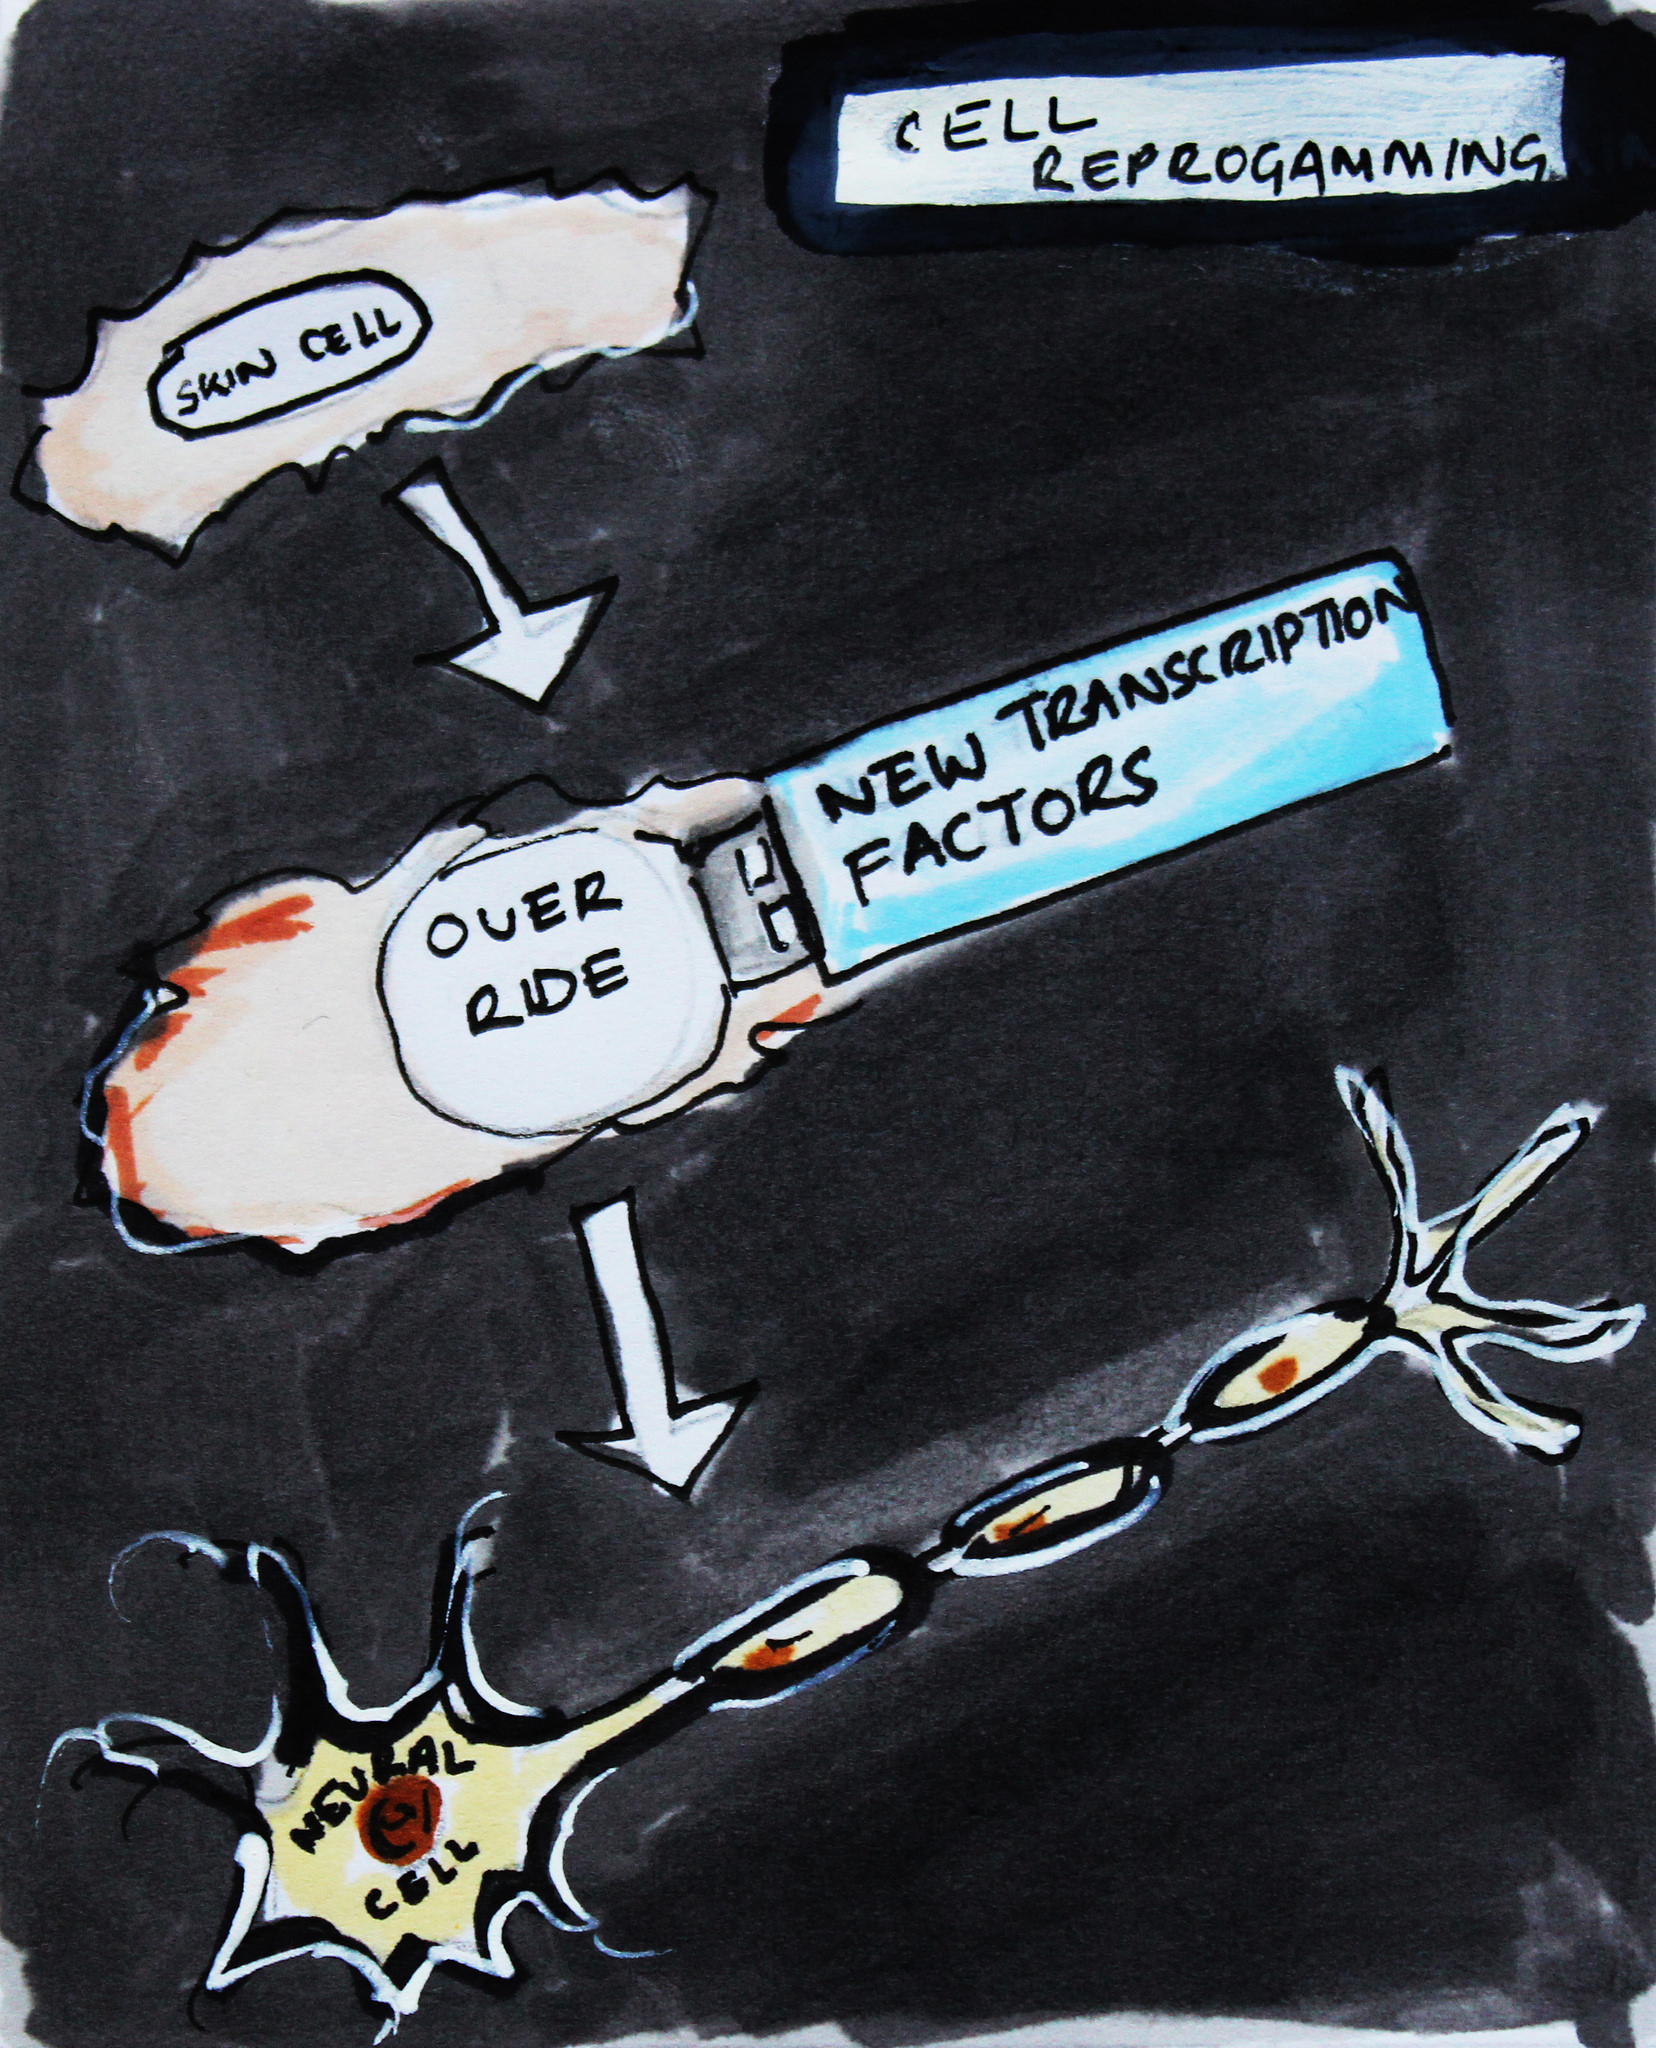 Hand-drawn illustration of cell reprogramming